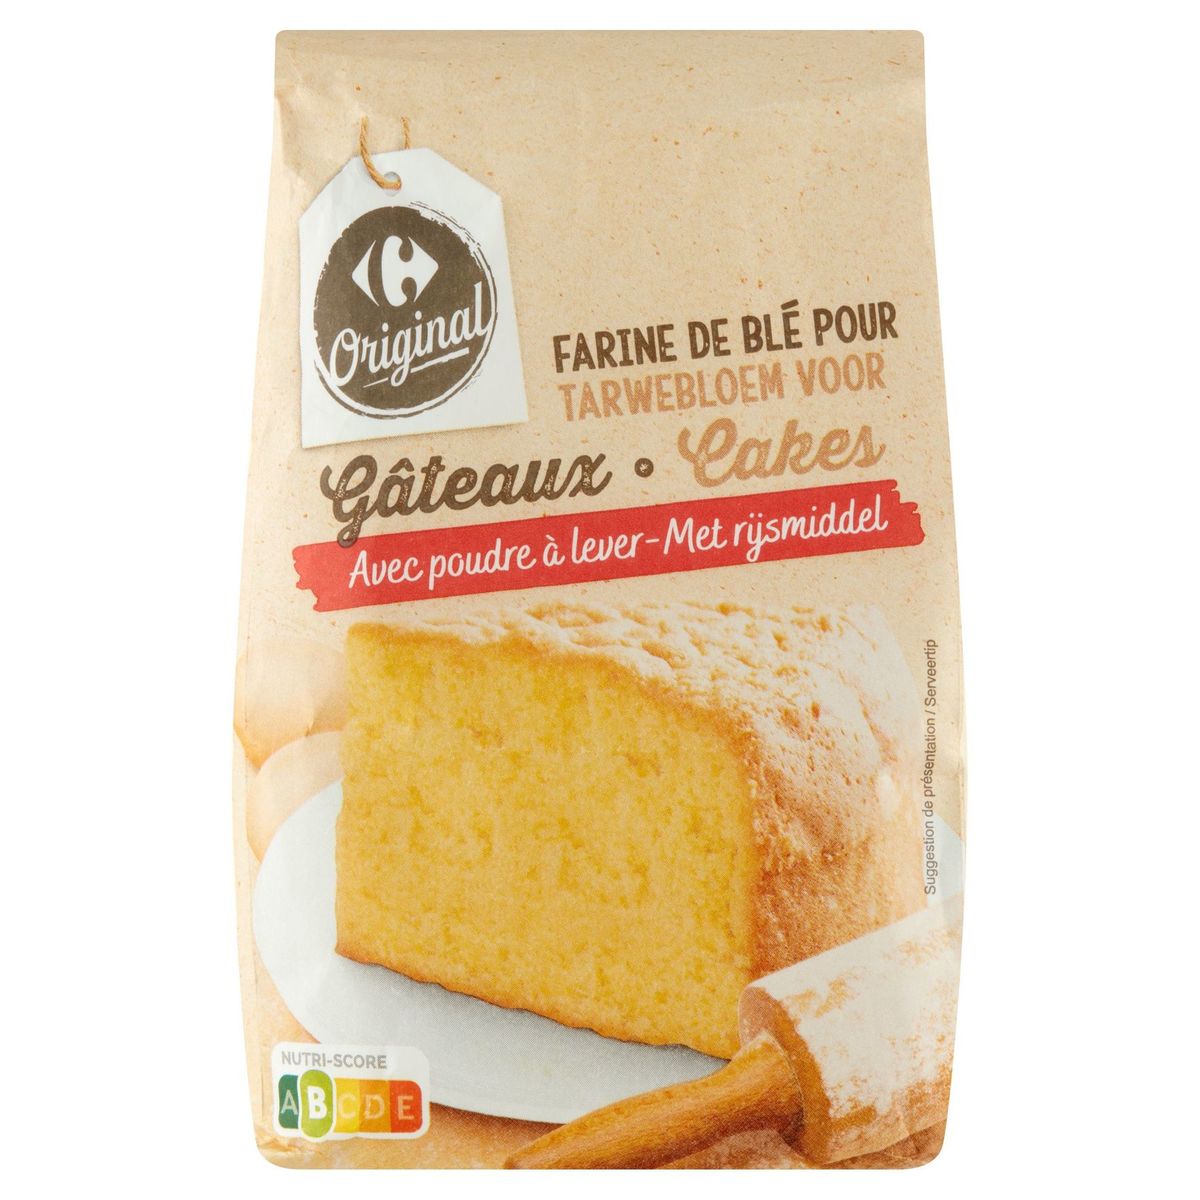 Carrefour Original Tarwebloem voor Cakes met Rijsmiddel 1 kg